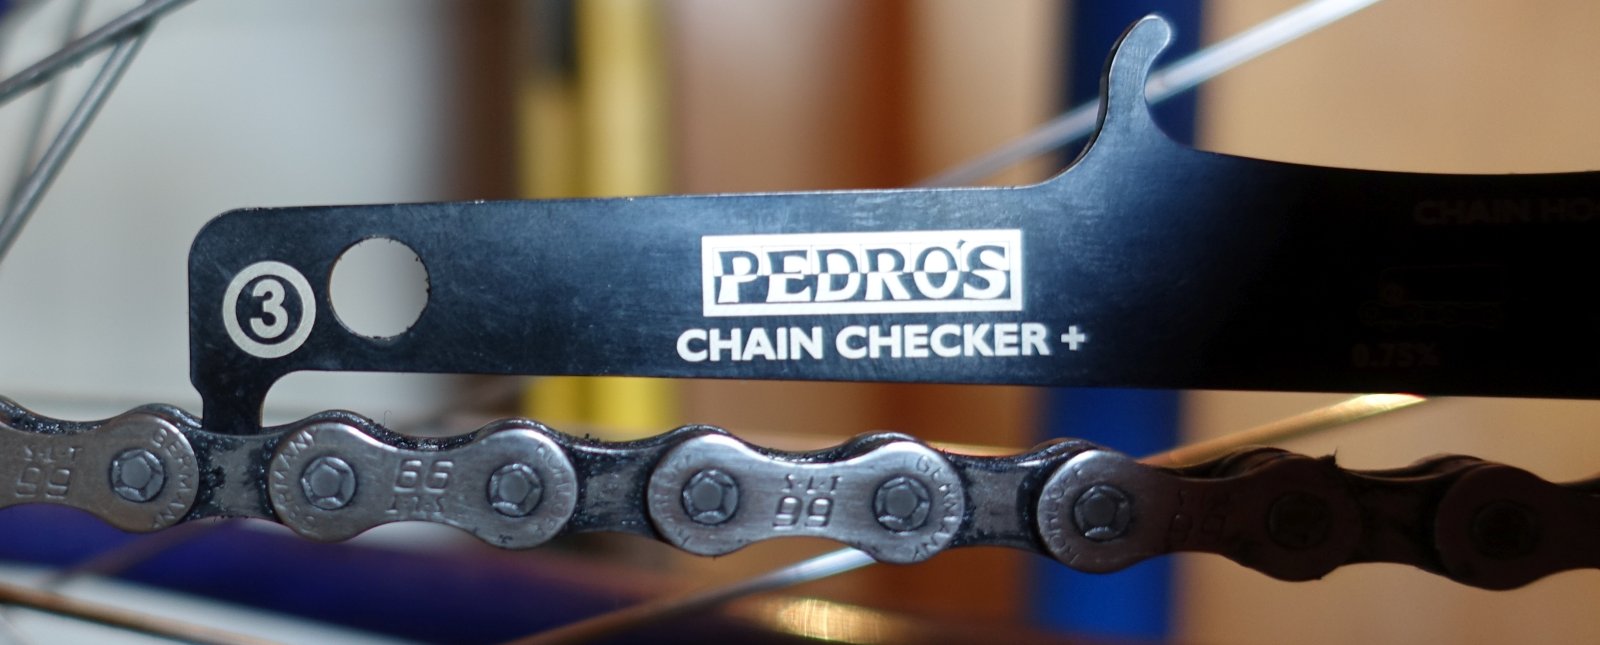 Pedros Chain Checker Plus II.JPG